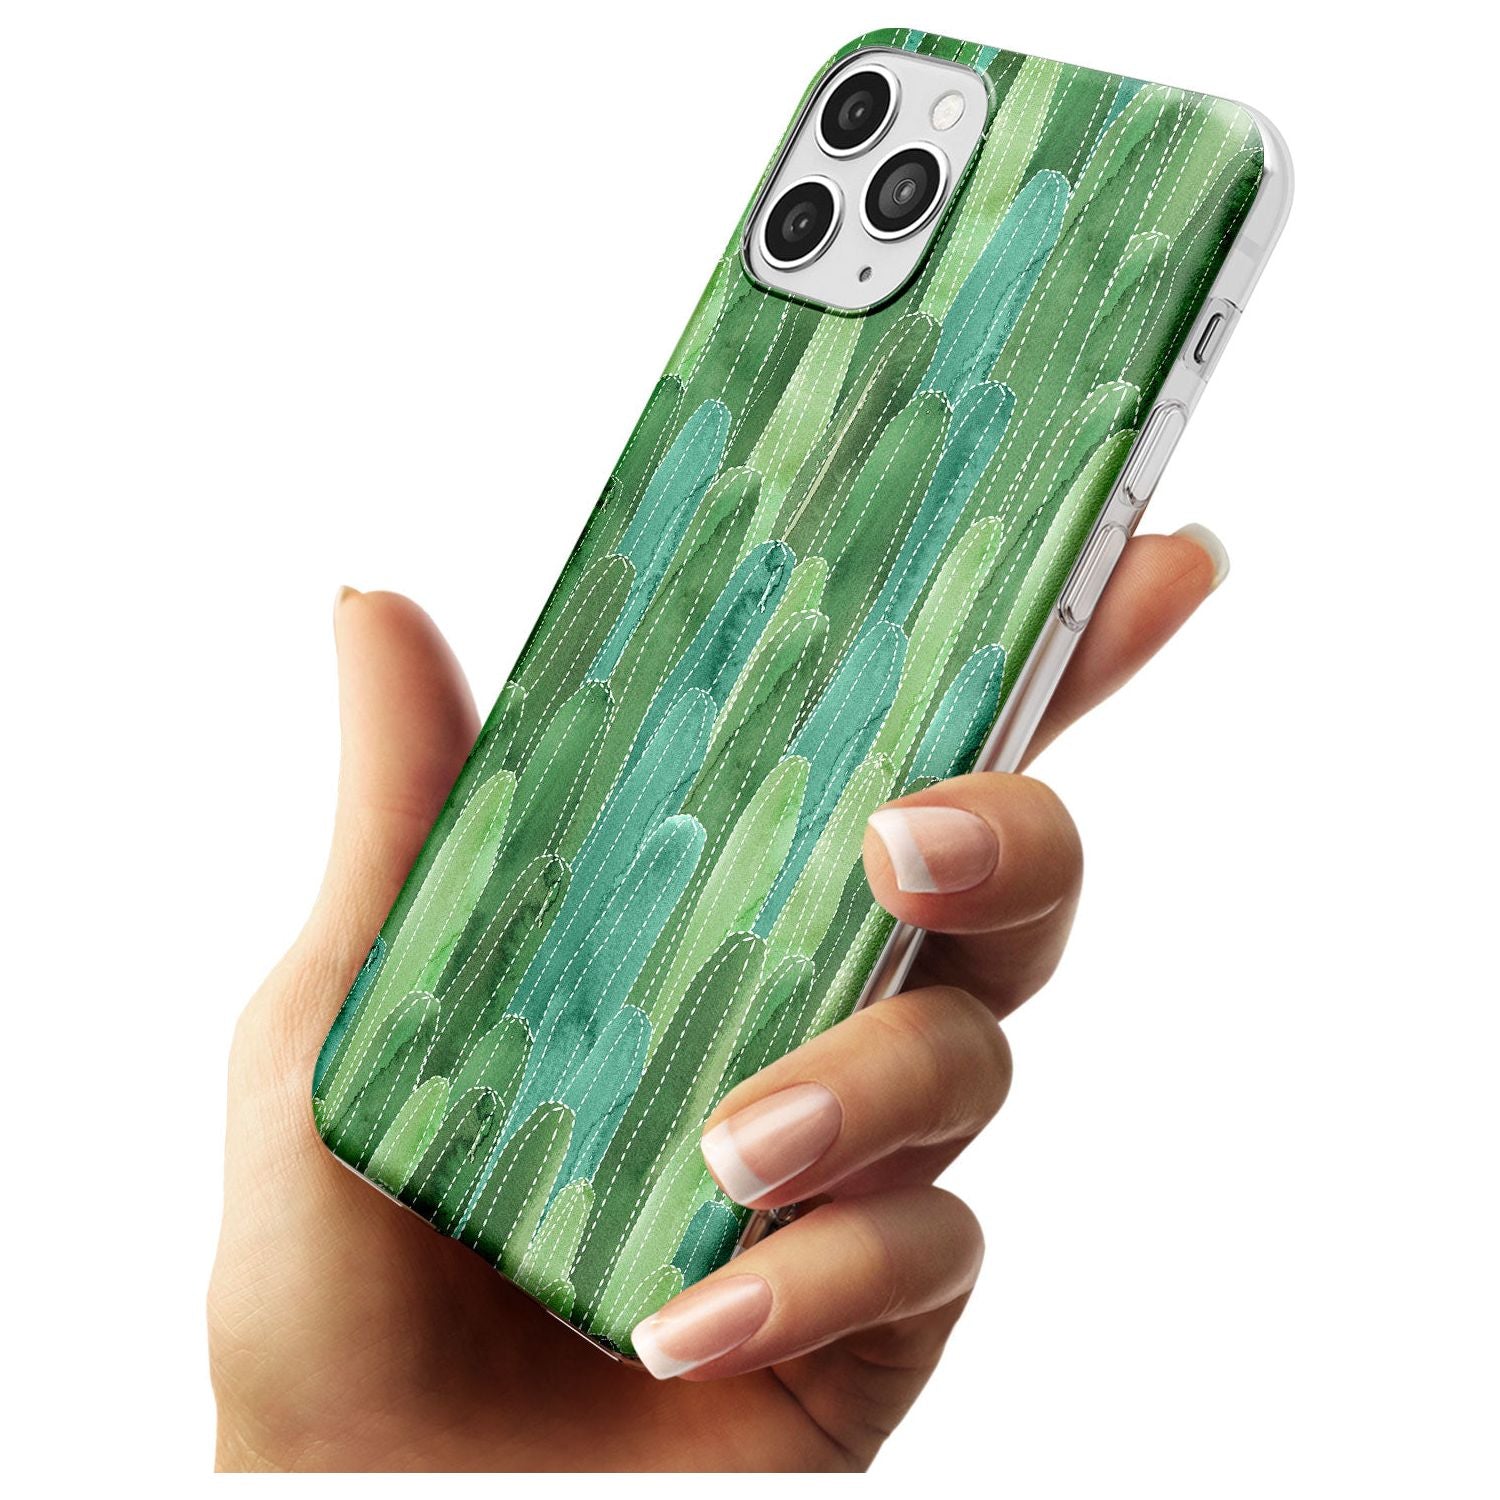 Skinny Cacti Pattern Design Slim TPU Phone Case for iPhone 11 Pro Max